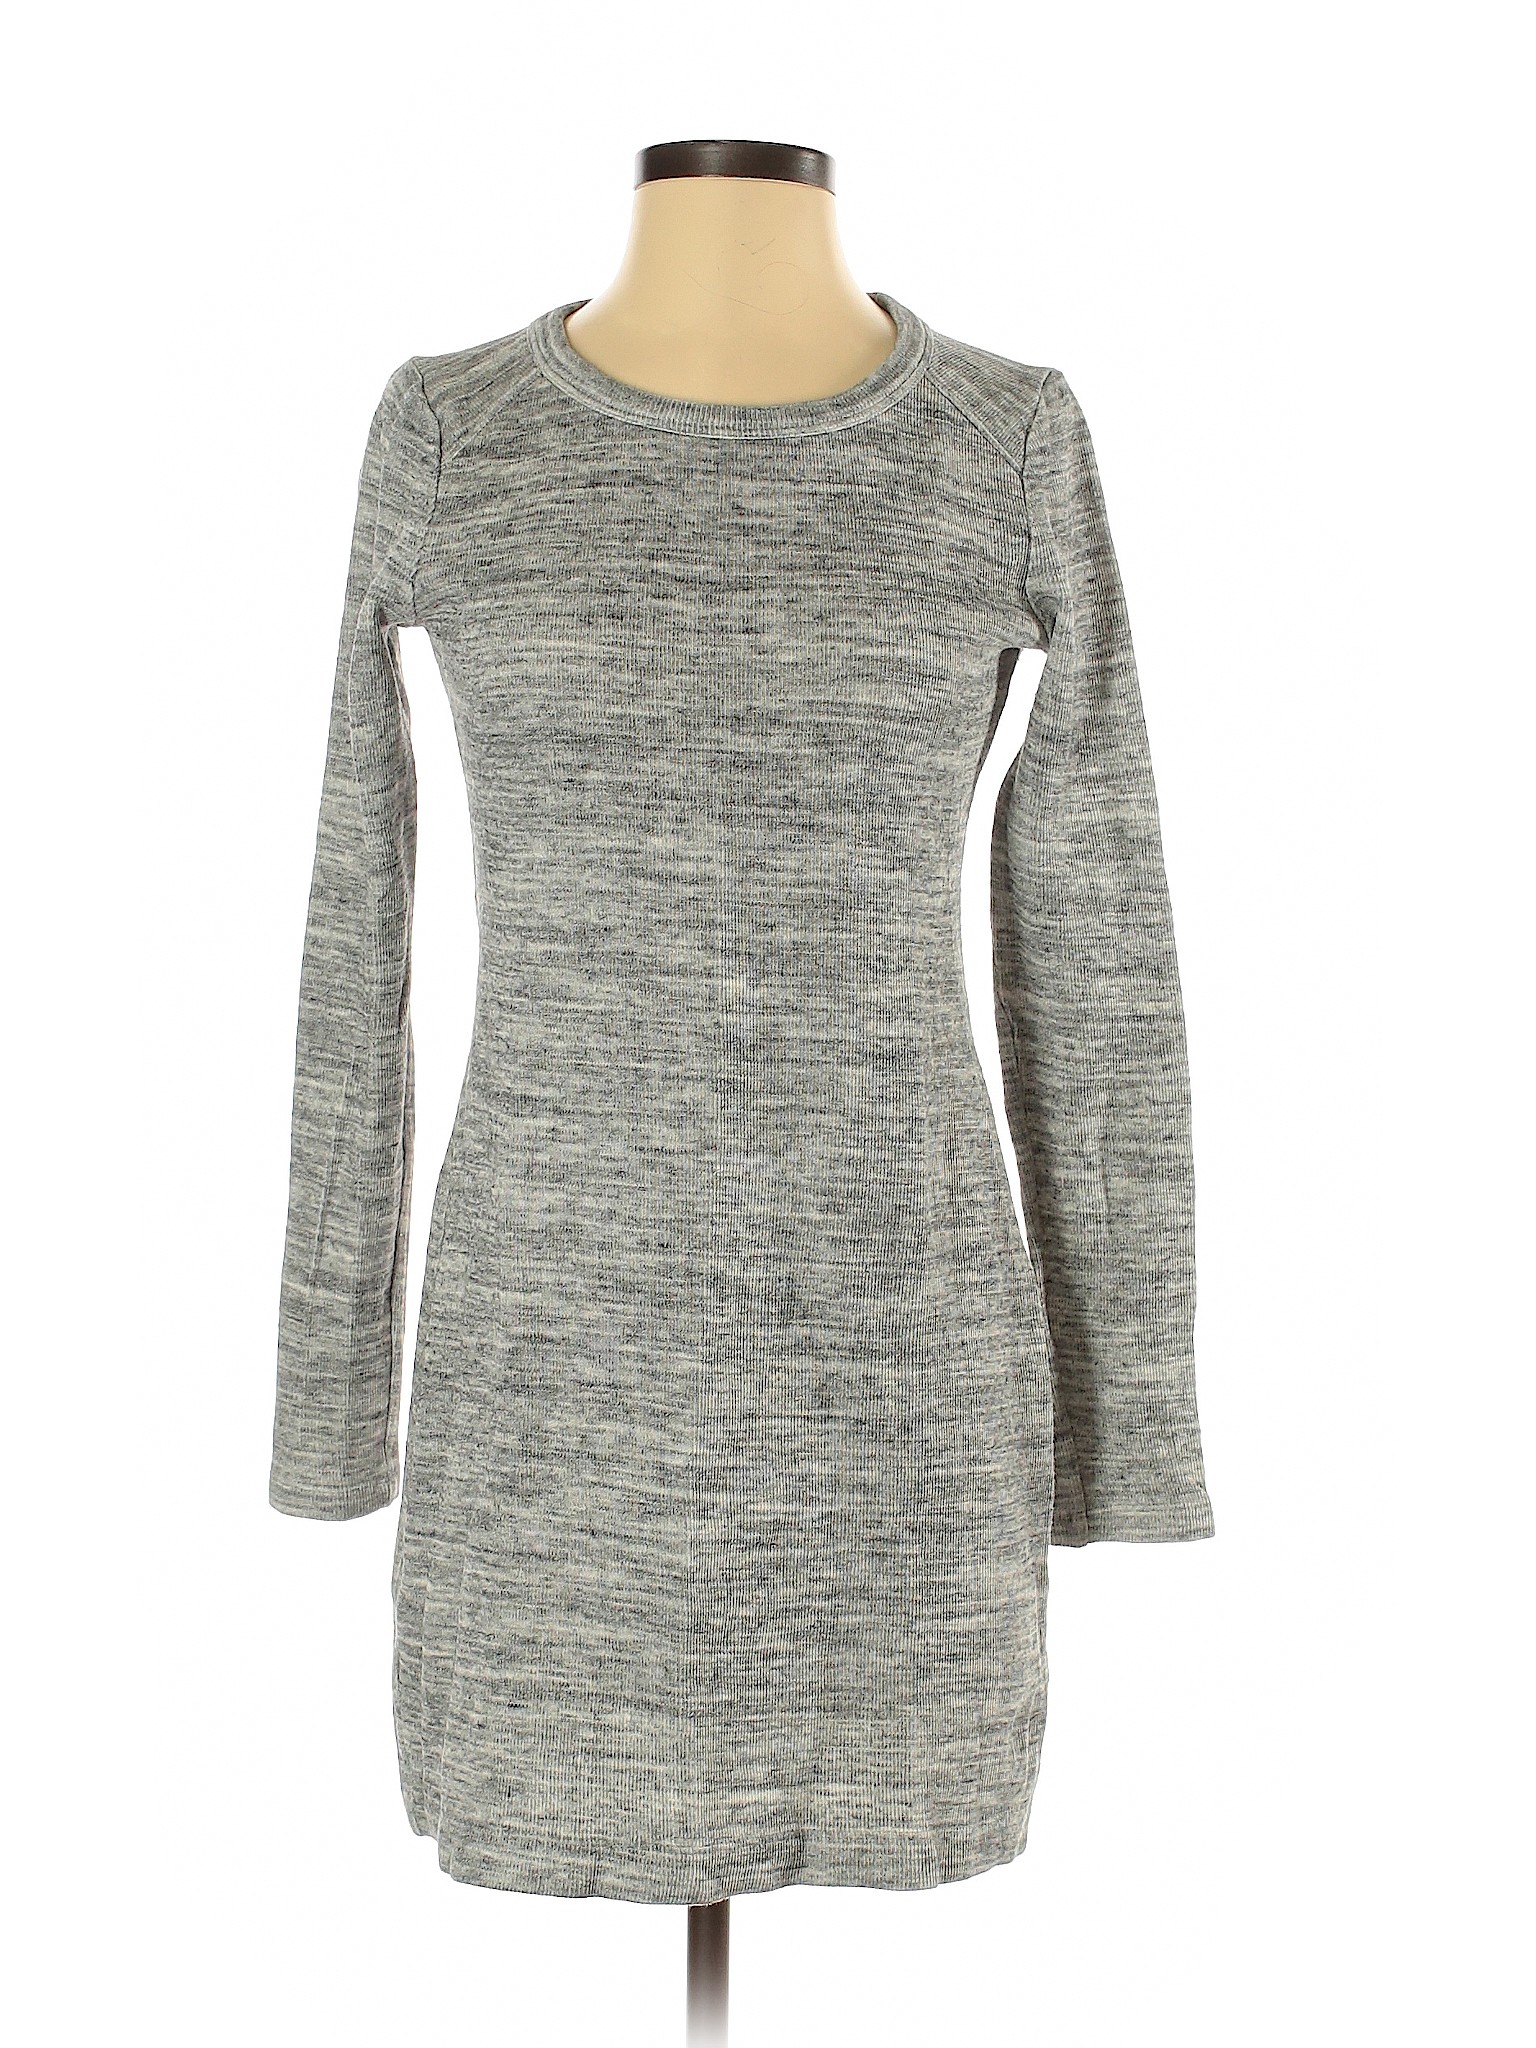 Lou & Grey Women Gray Casual Dress XS | eBay